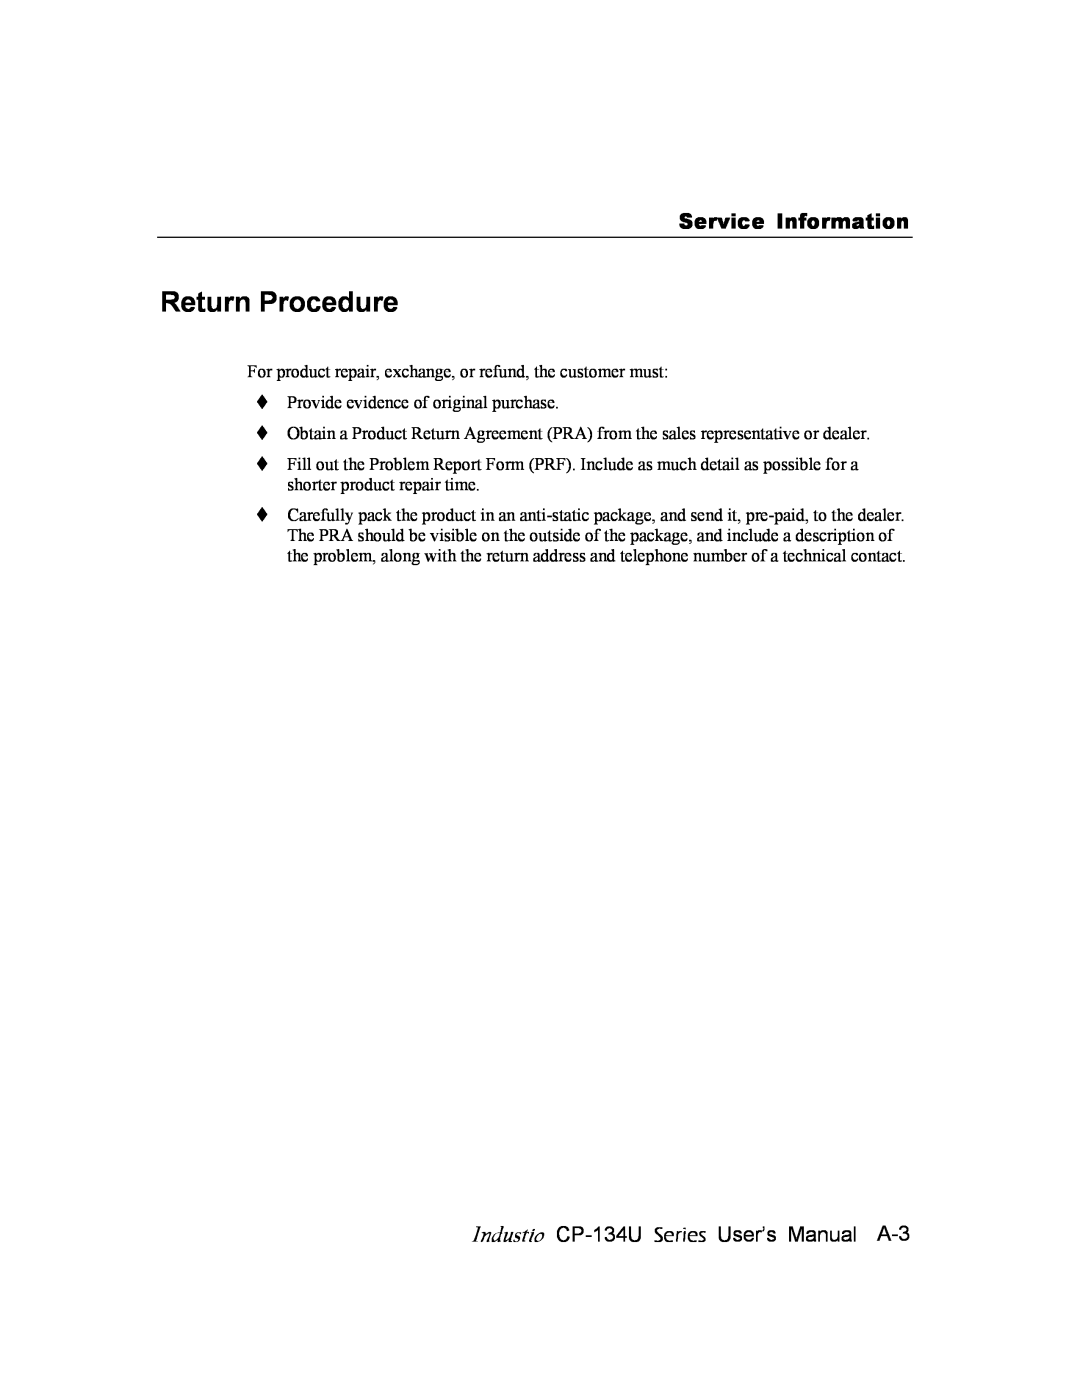 Moxa Technologies user manual Return Procedure, Service Information, Industio CP-134U Series User’s Manual A-3 